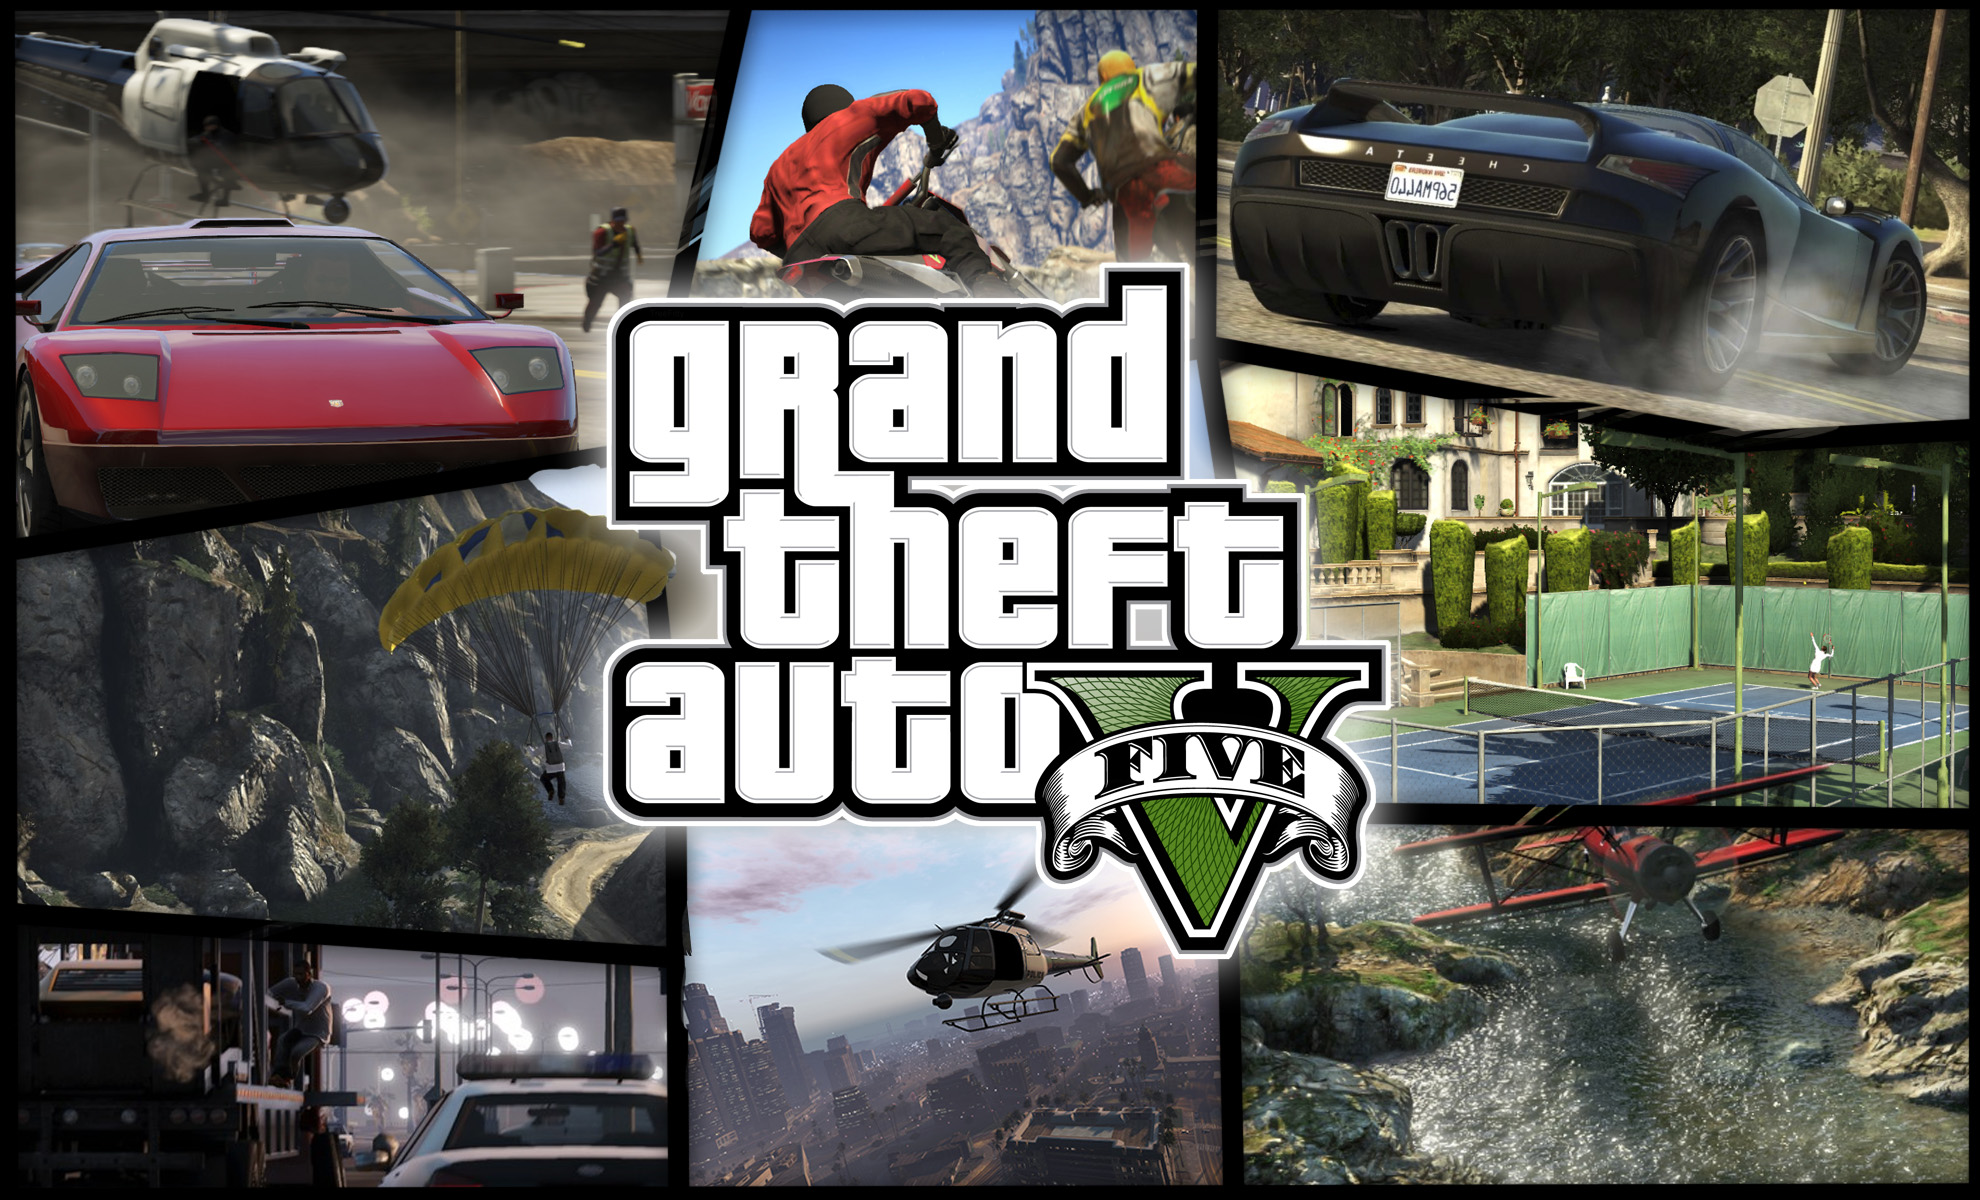 Grand theft adventures. Grand Theft auto v (Xbox 360). Обои ГТА 5. ГТА 5 Grand Theft auto v. ГТА 5 на Xbox 360.